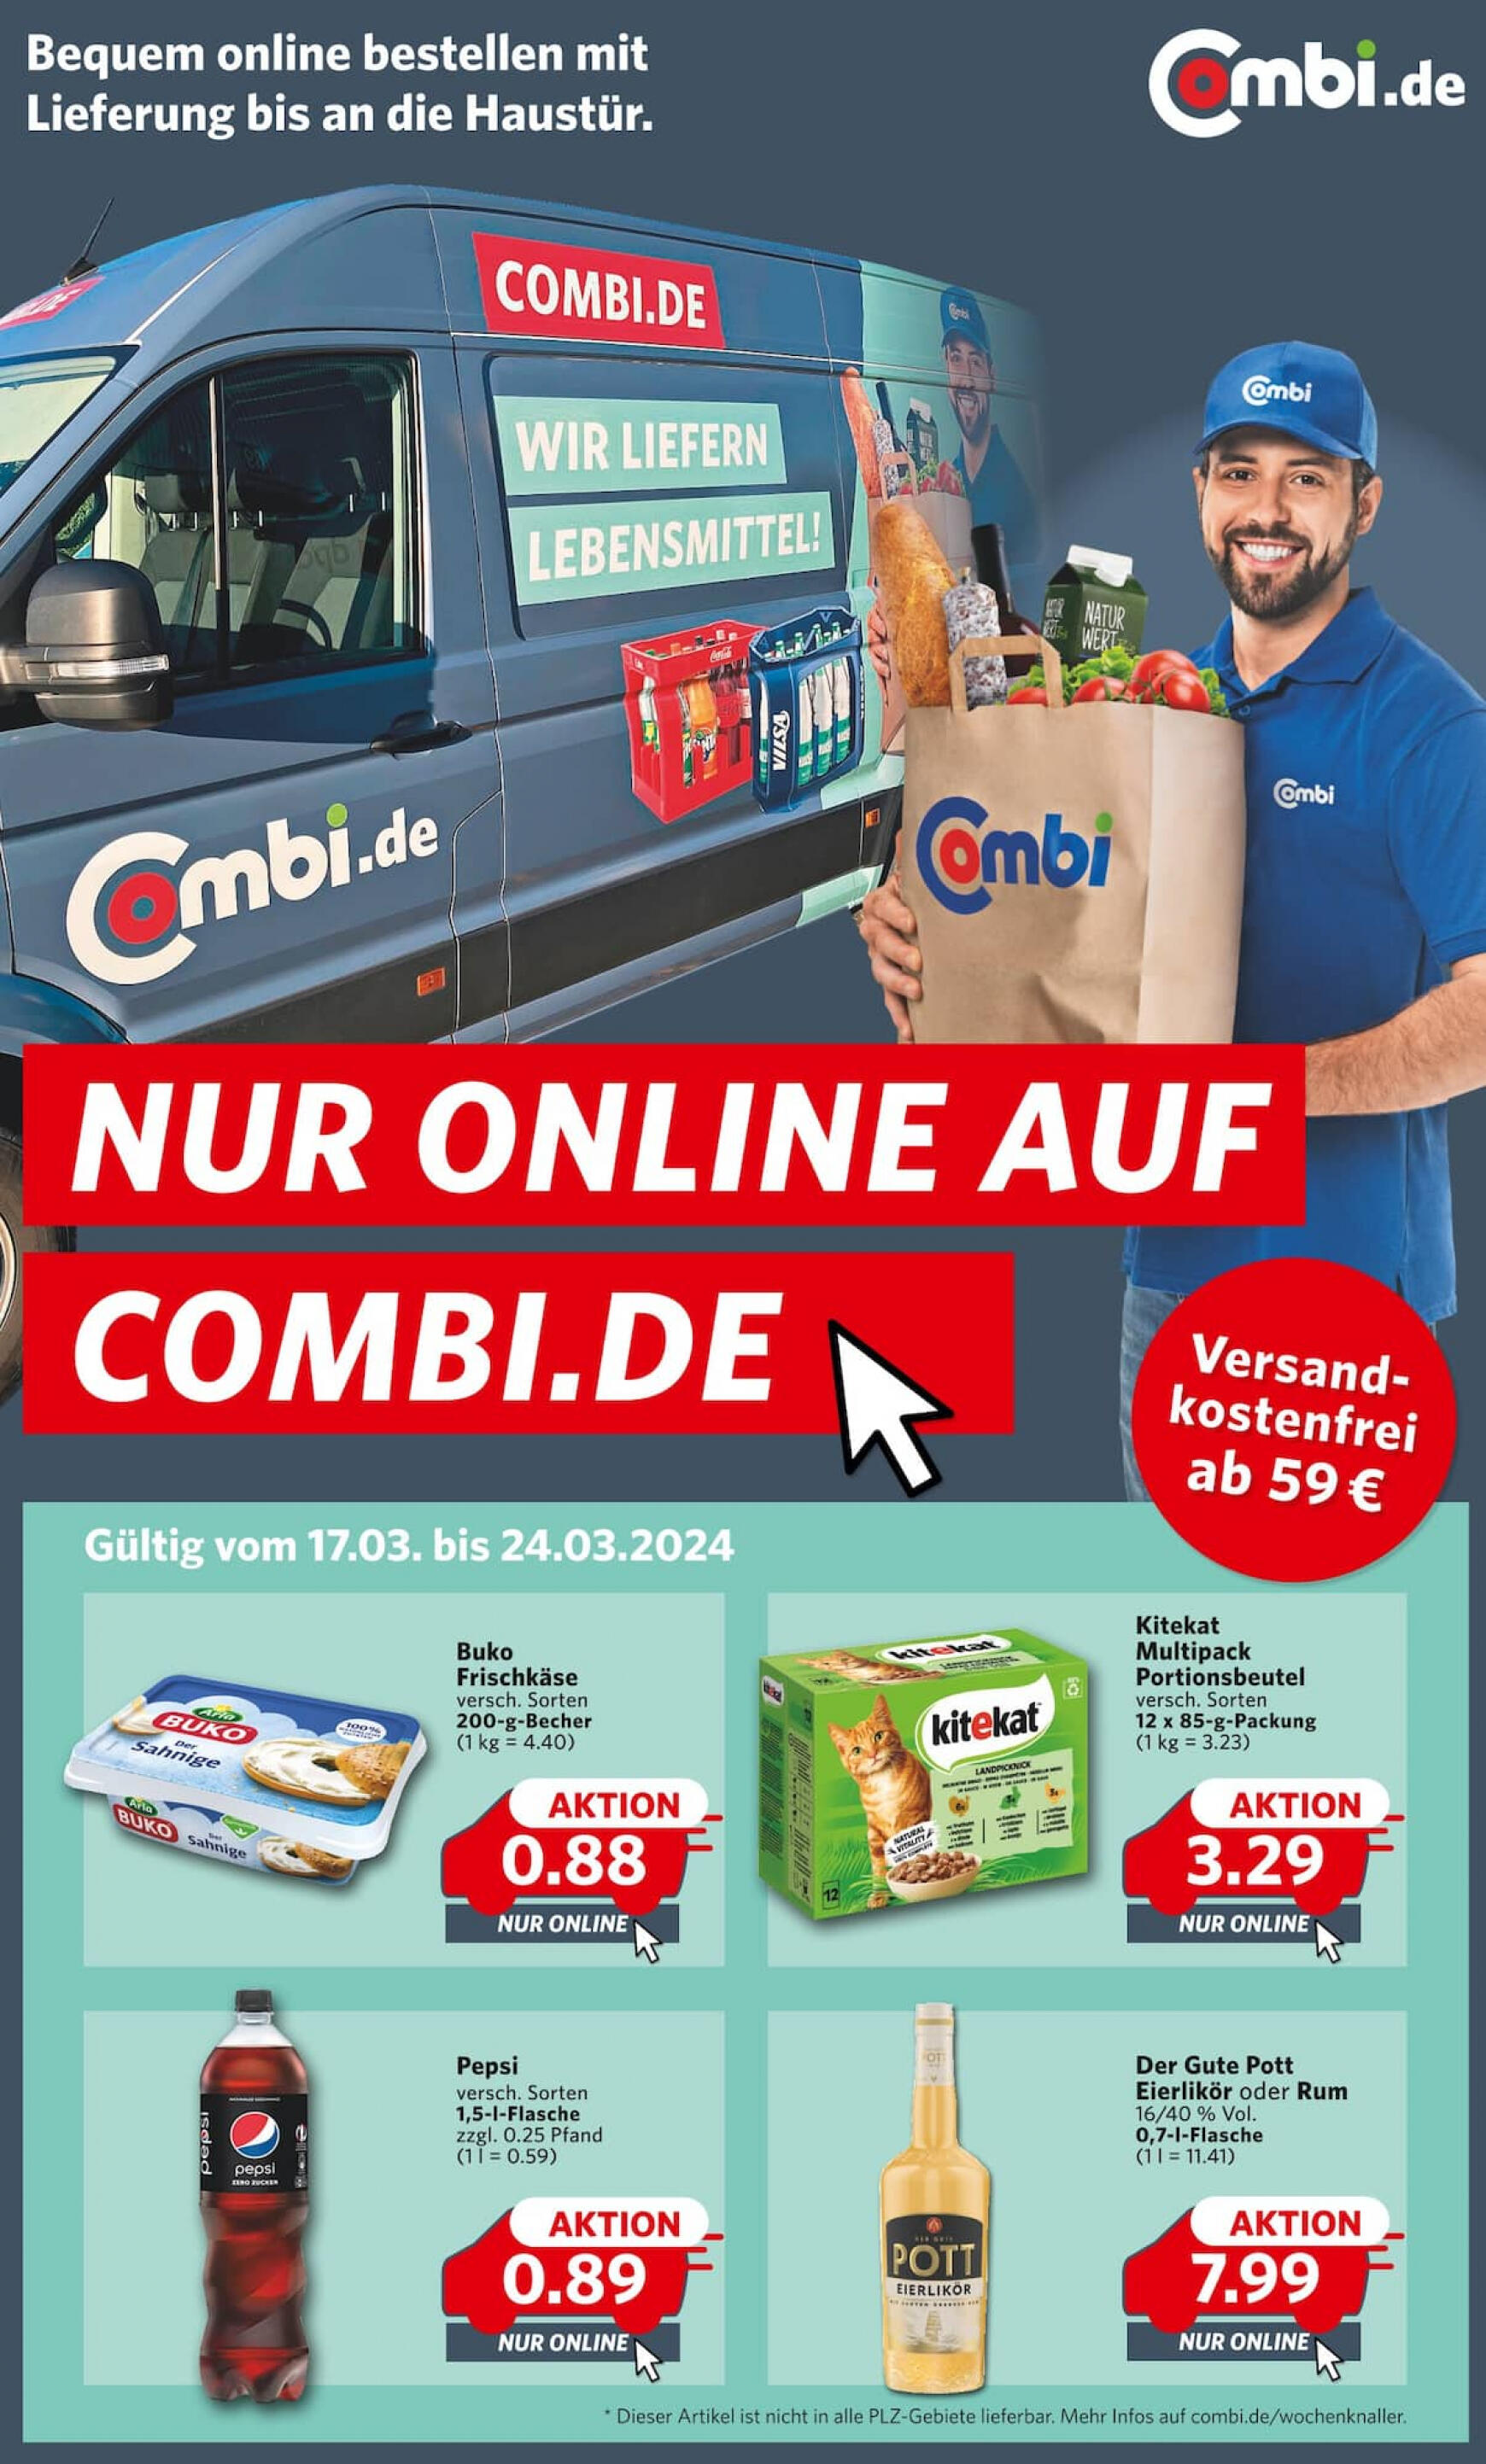 combi - Combi - Nur online auf combi.de gültig ab 17.03.2024